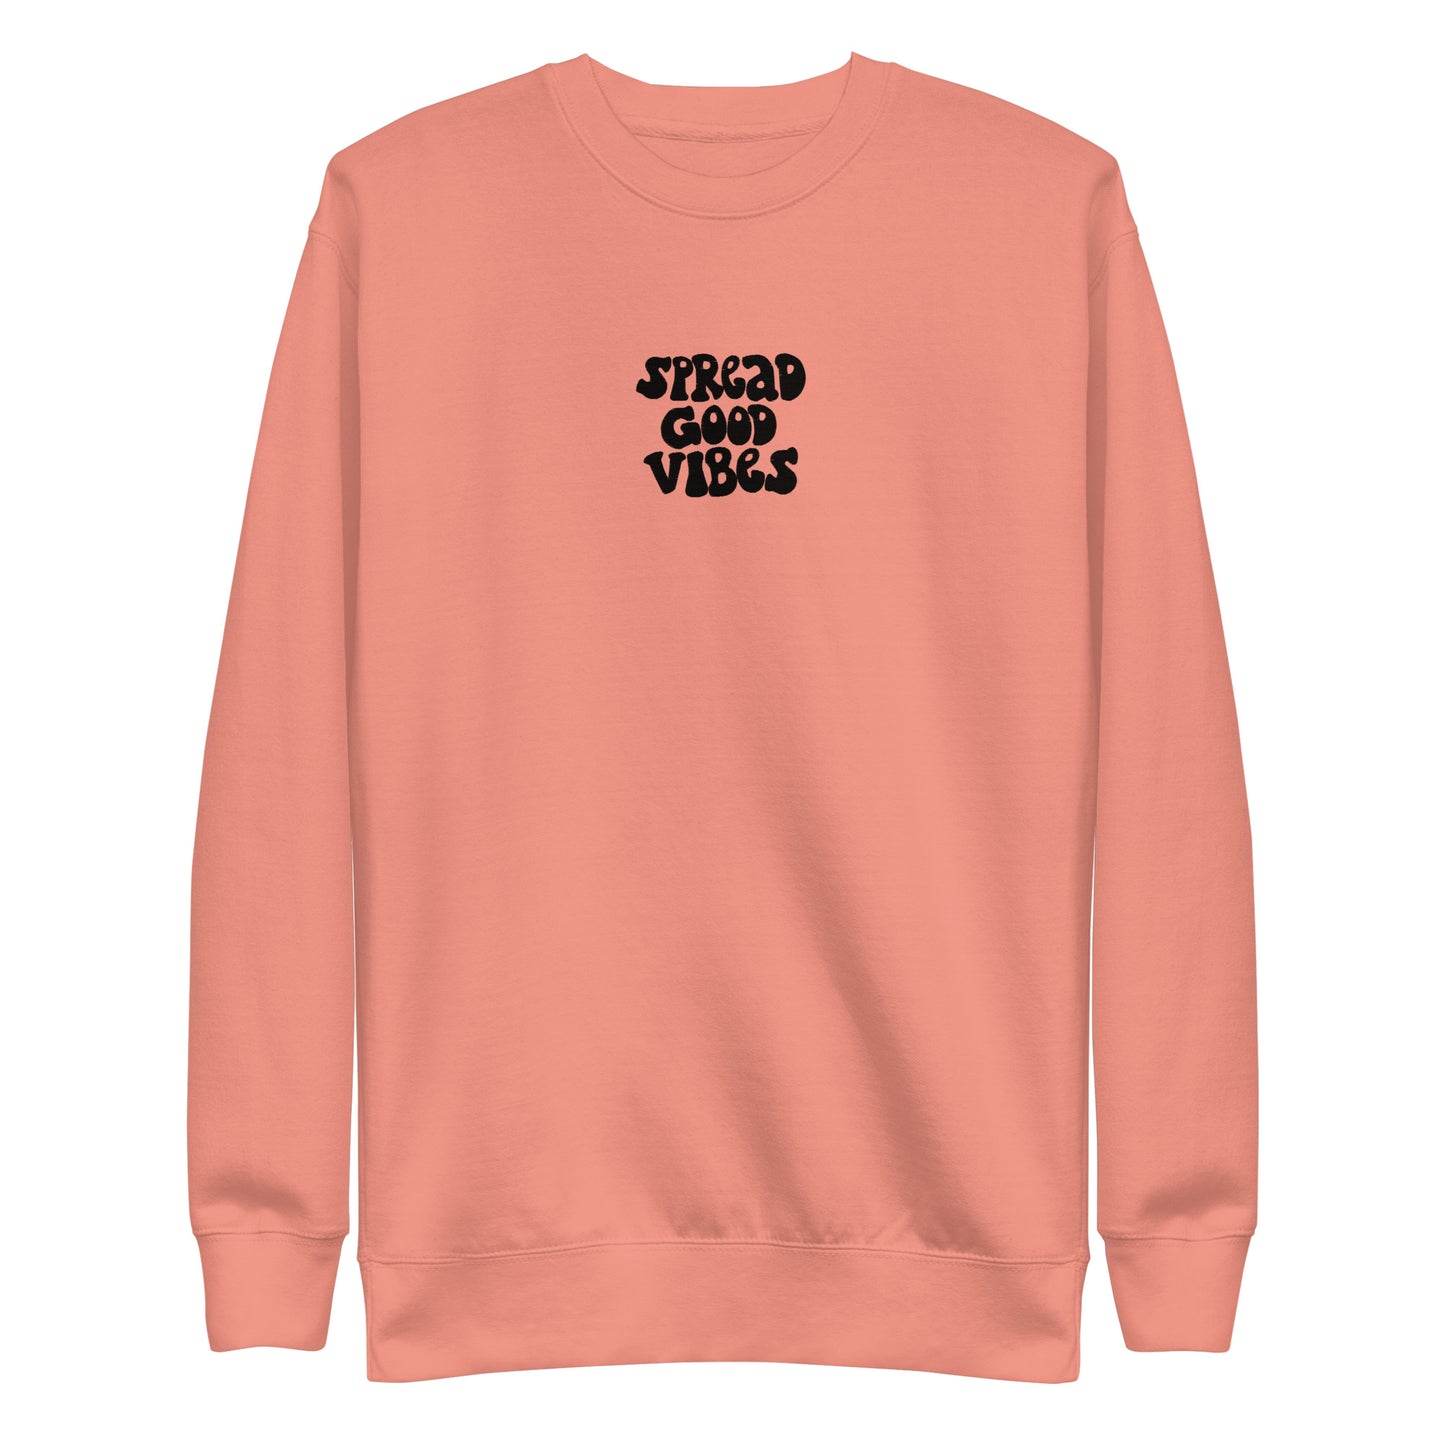 spread good vibes crewneck sweatshirt